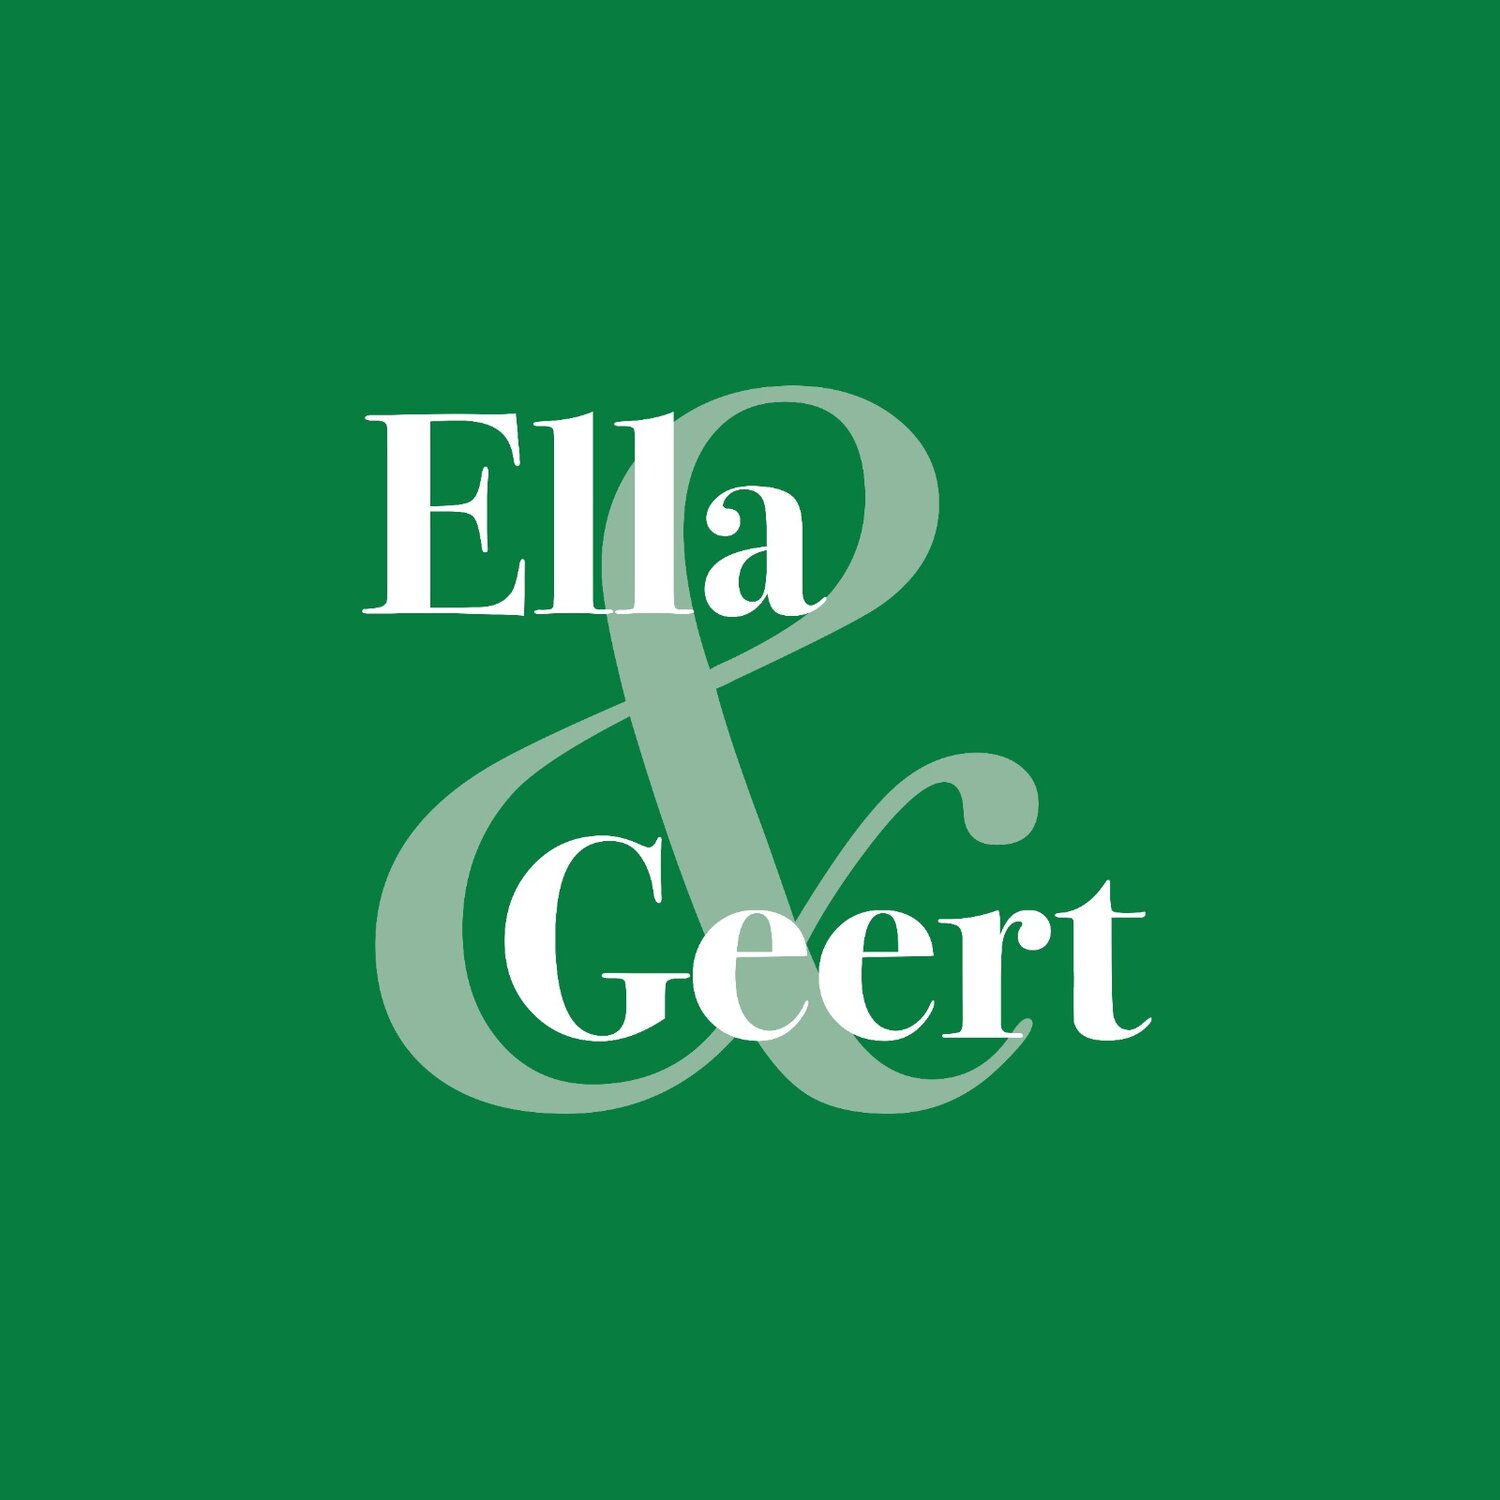 Ella and Geert